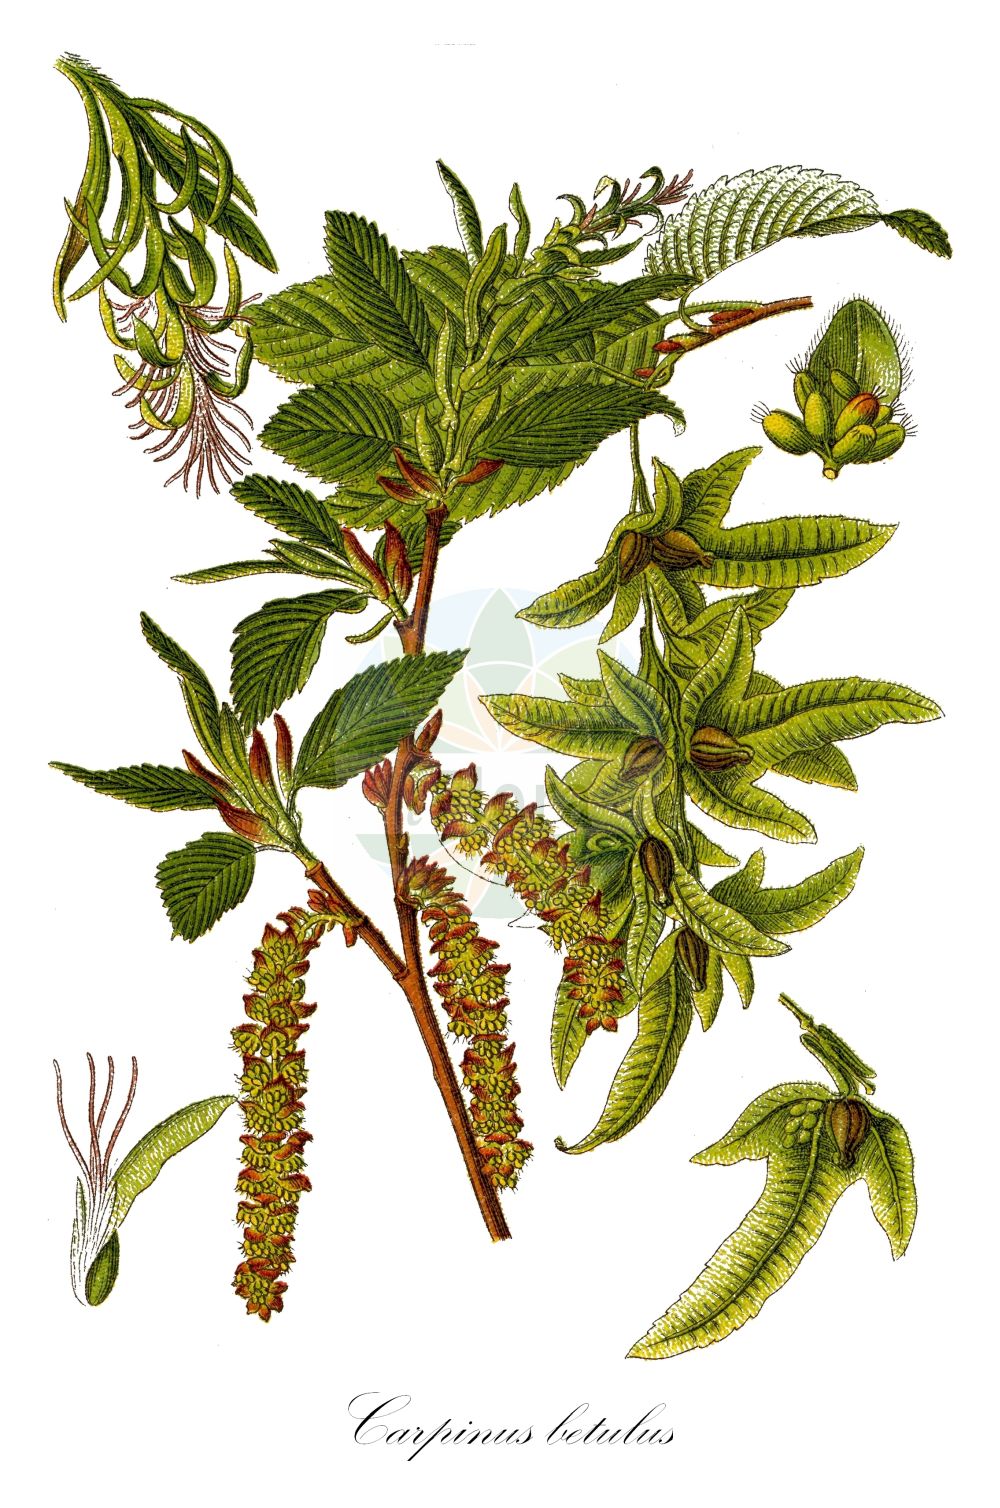 Historische Abbildung von Carpinus betulus (Hainbuche - Hornbeam). ---- Historical Drawing of Carpinus betulus (Hainbuche - Hornbeam).(Carpinus betulus,Hainbuche,Hornbeam,Carpinus betulus,Carpinus caucasica,Hainbuche,Gewoehnliche Hainbuche,Weissbuche,Hornbeam,Common Hornbeam,European Hornbeam,White Beech,Carpinus,Hainbuche,Hornbeam,Betulaceae,Birkengewächse,Birch family,Sturm (1796f))